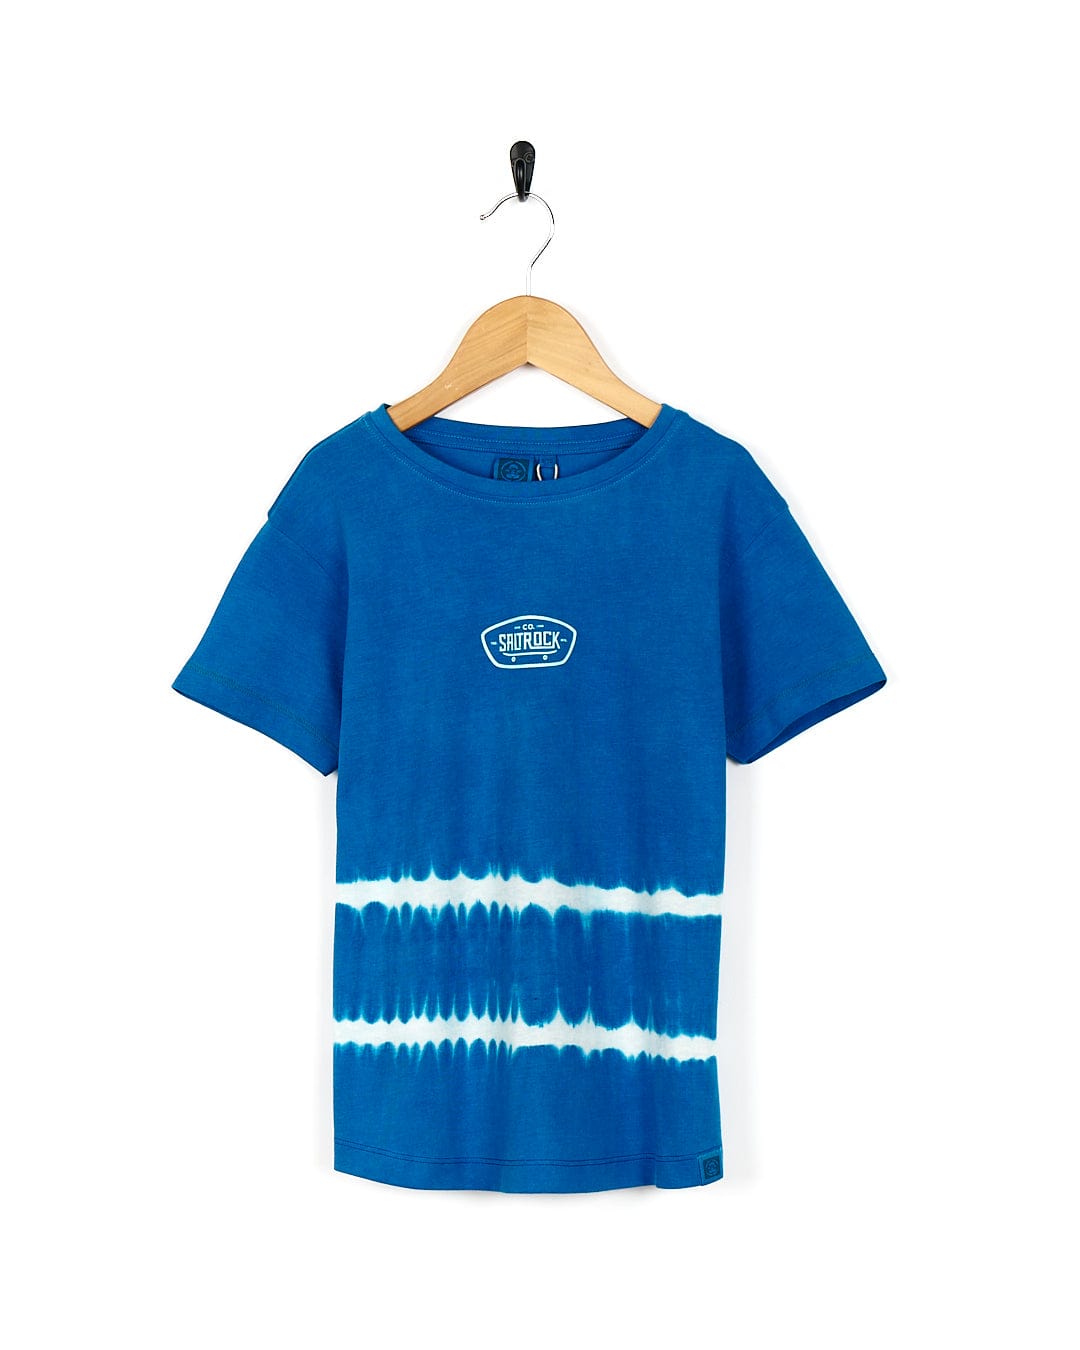 Hardskate - Kids Tie Dye Short Sleeve T-Shirt - Blue